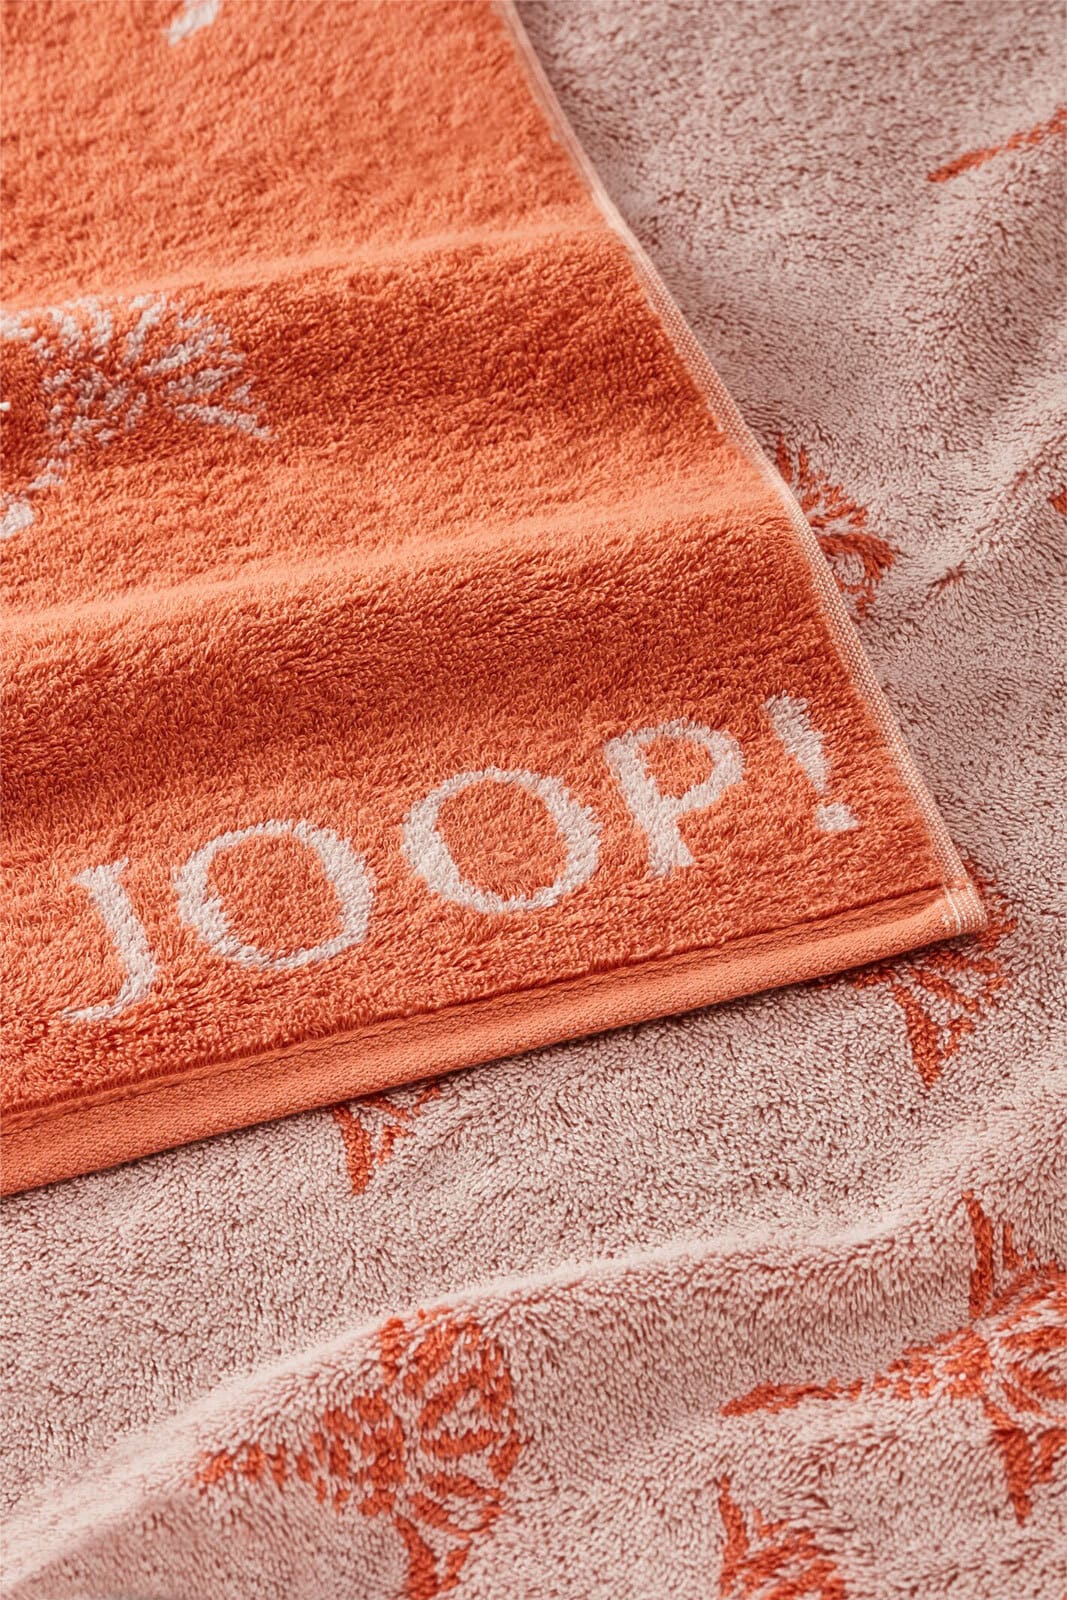 JOOP! Handtuch MOVE FADED CORNFLOWER 50 x 100 cm apricot  